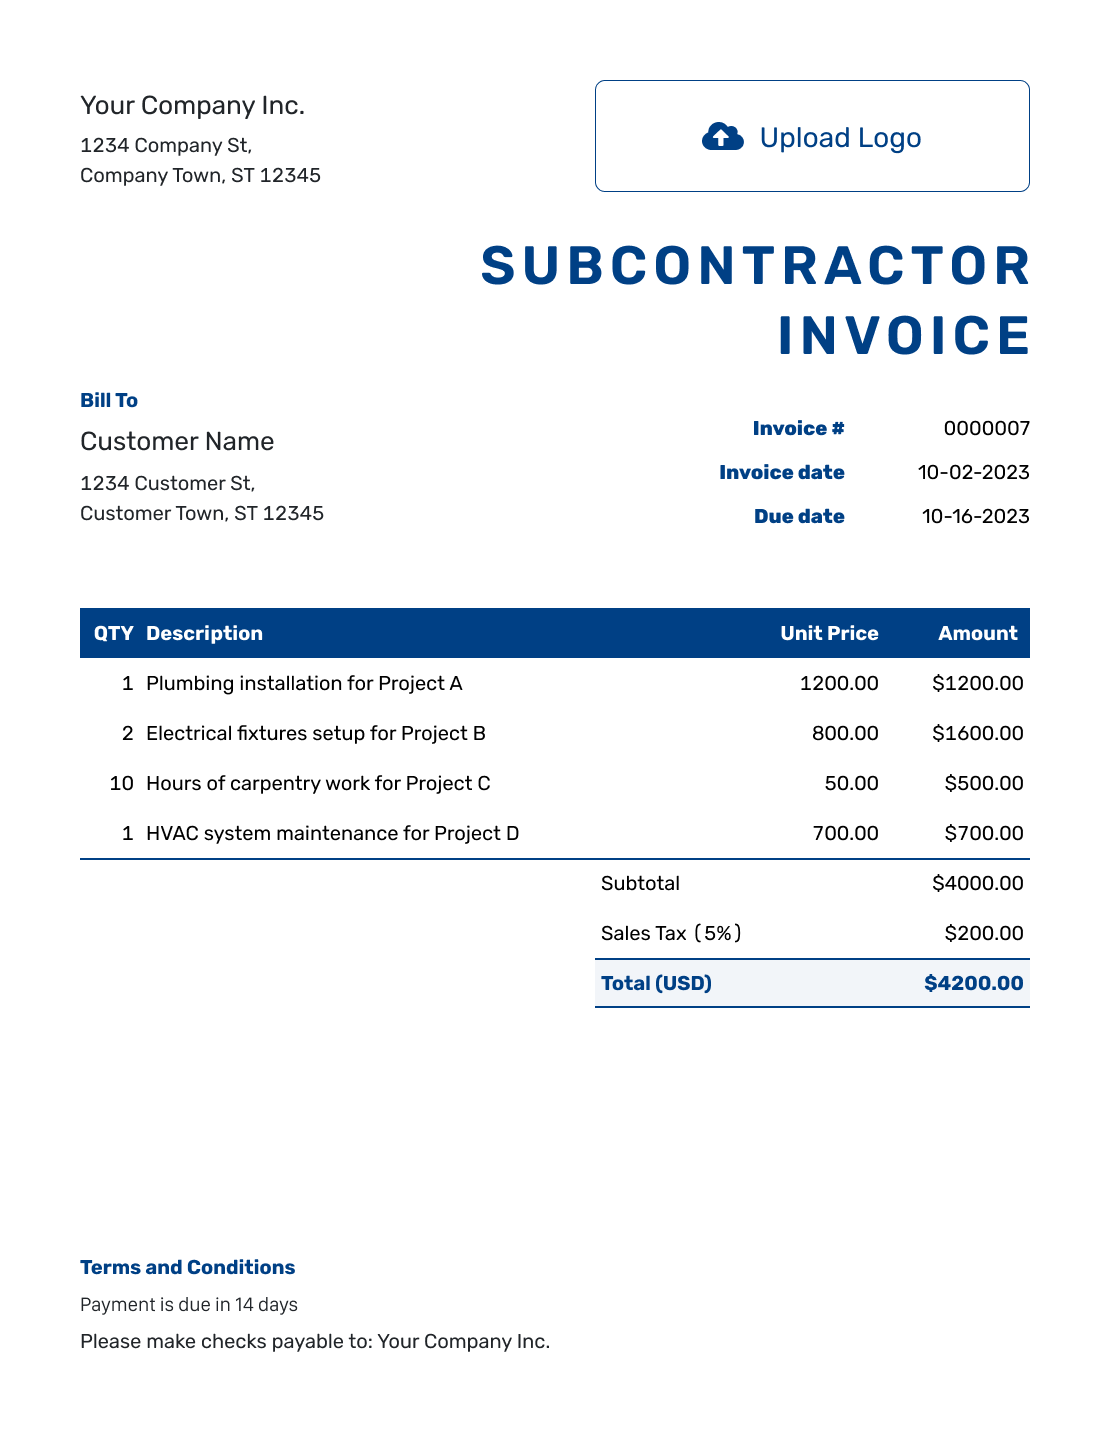 Sample Subcontractor Invoice Template